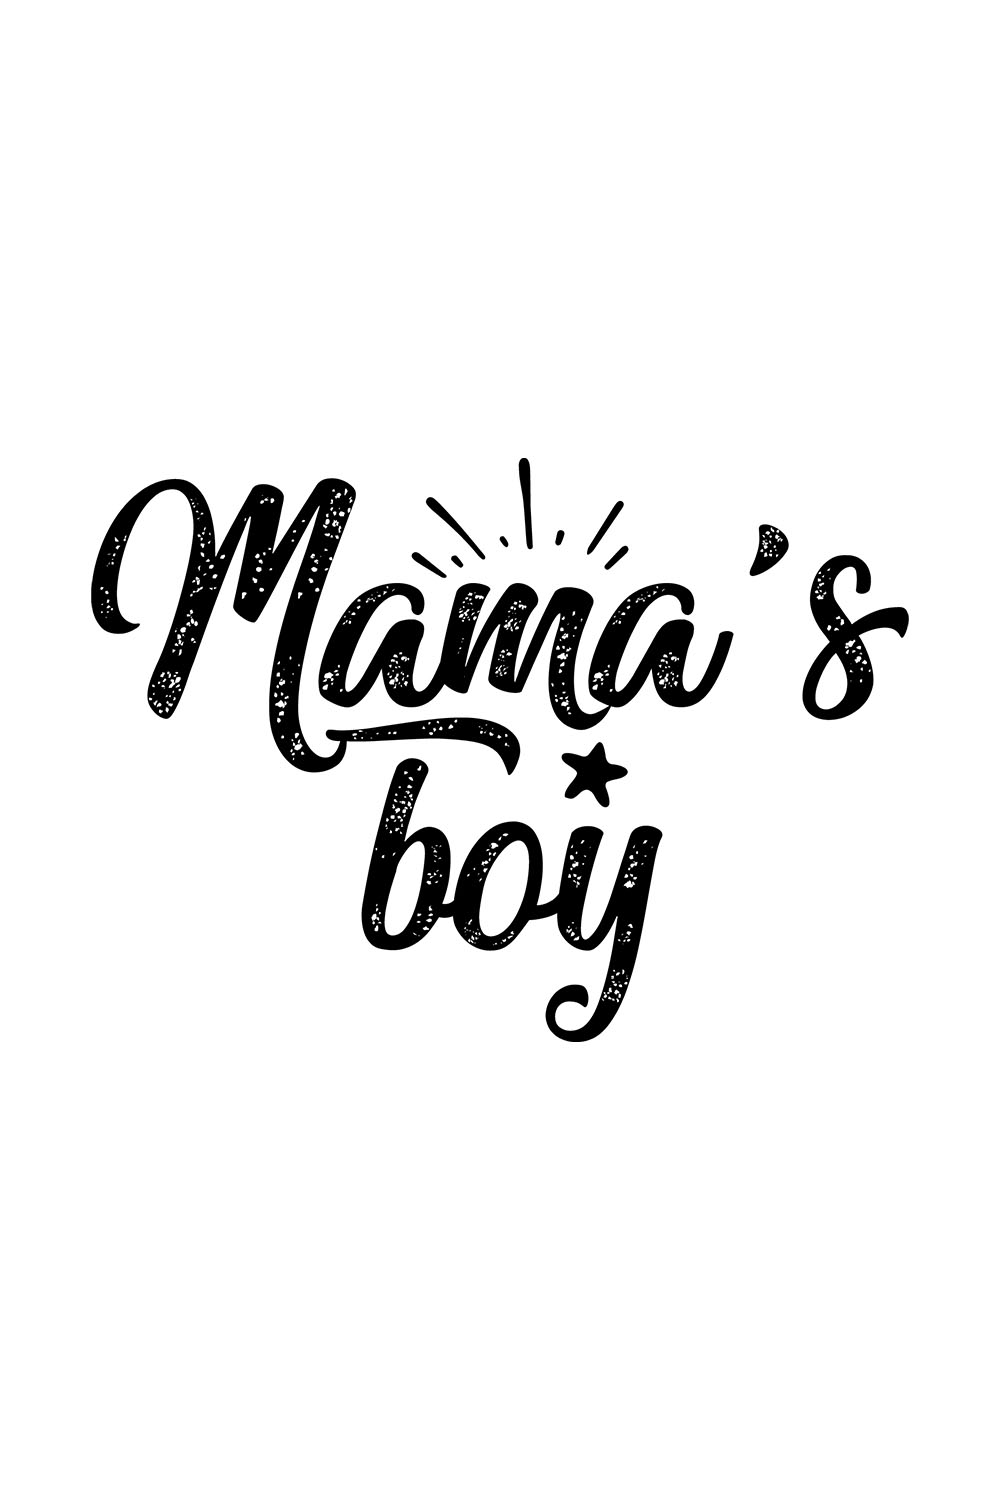 Image with amazing black lettering mamas boy.